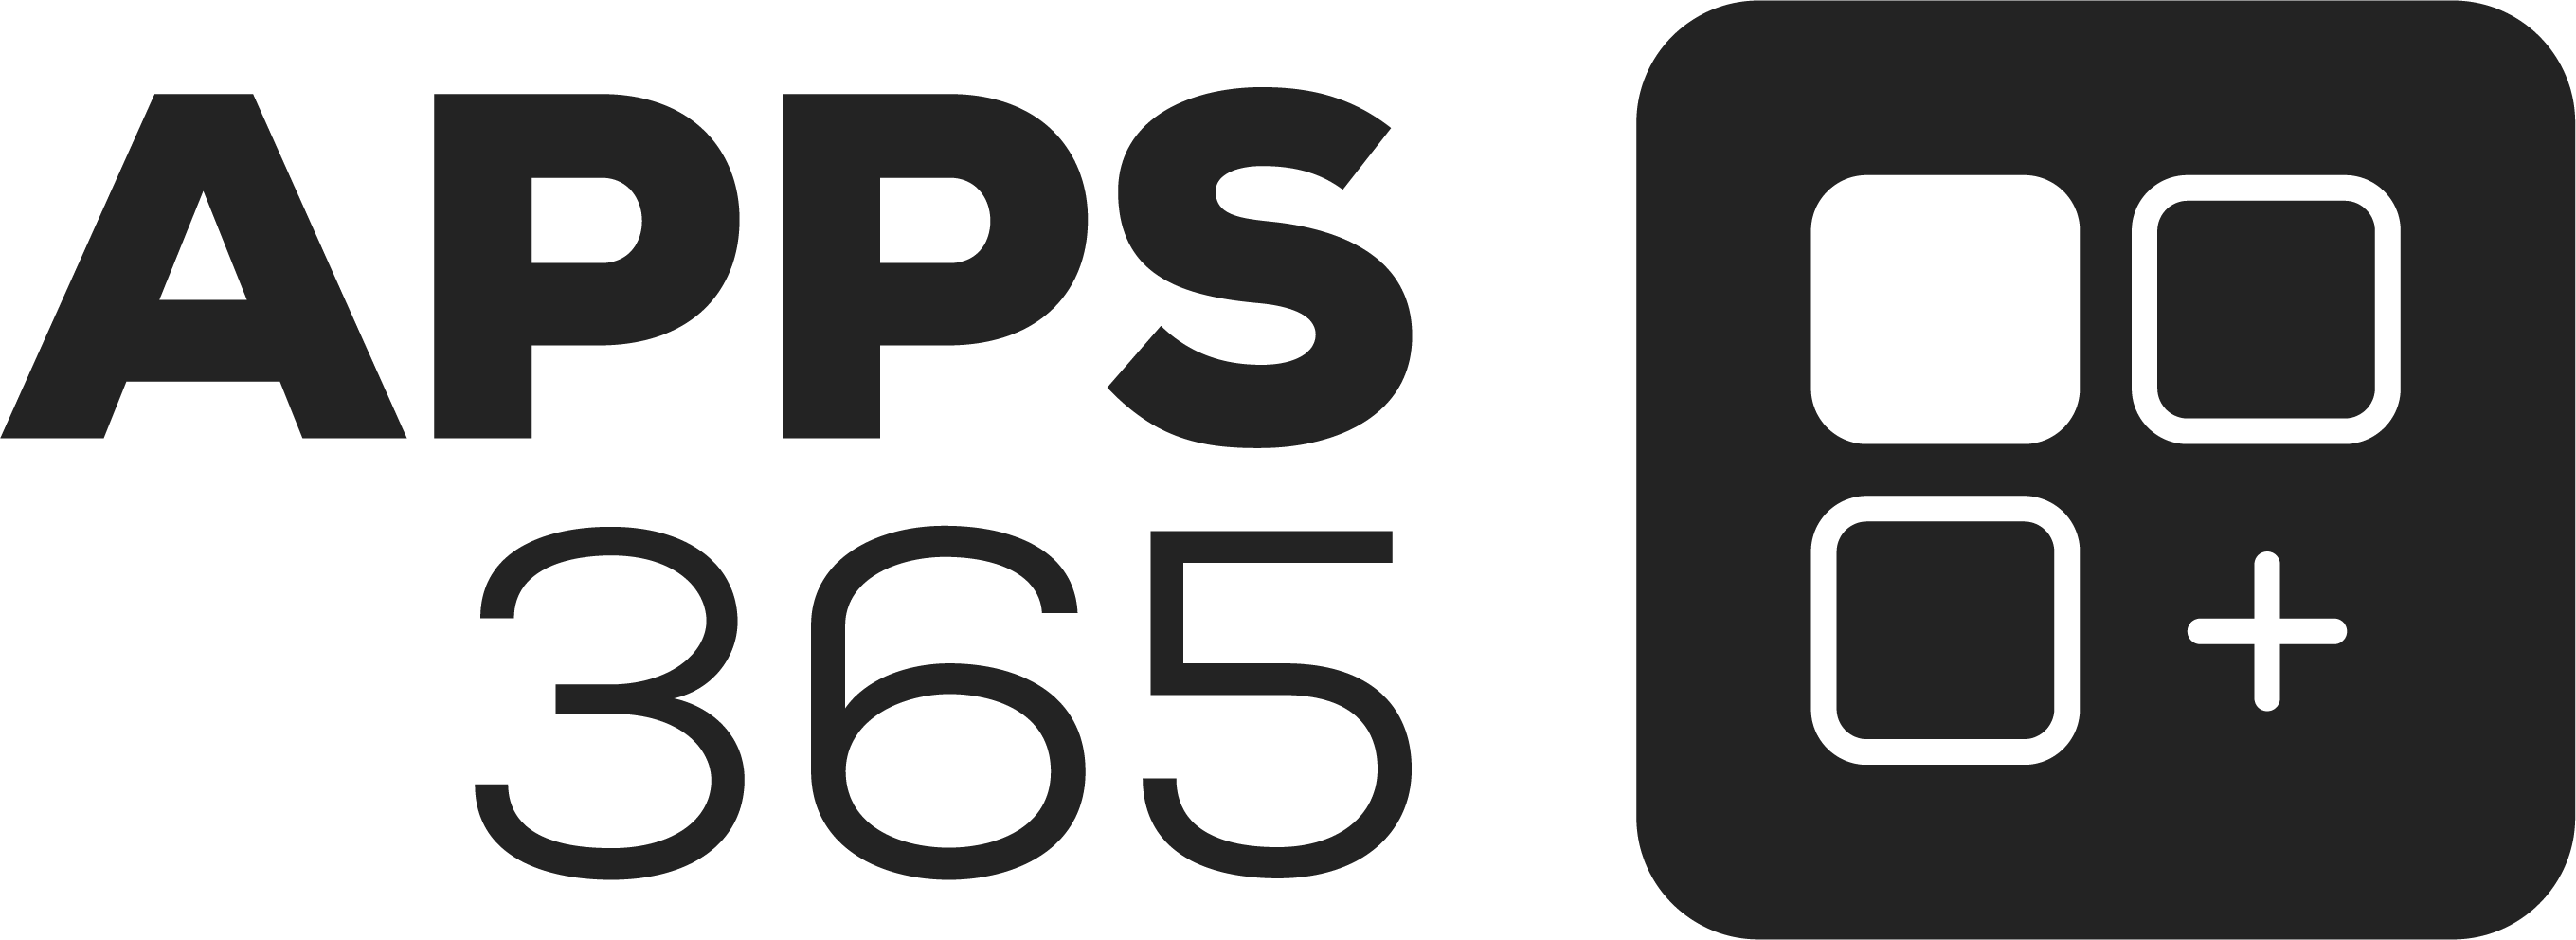 Apps365 logo background white | APPS 365